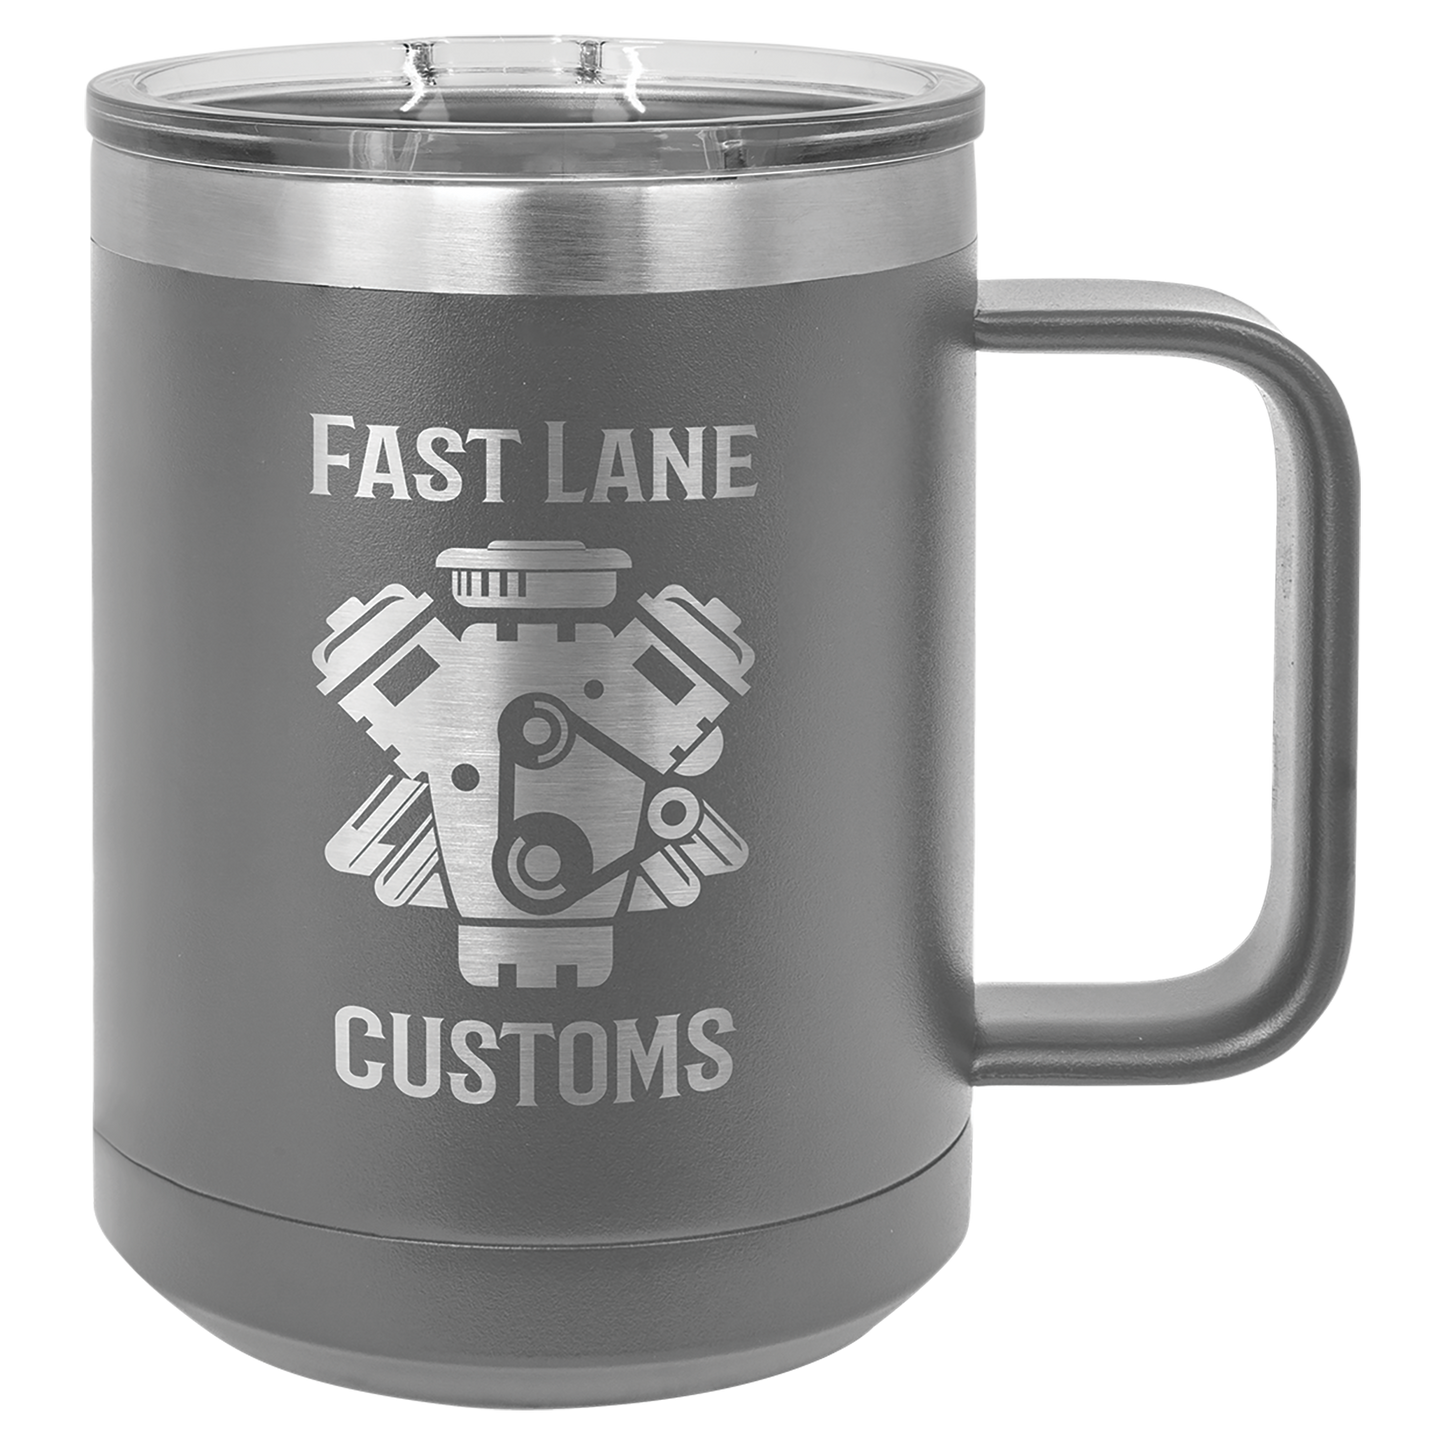 15 oz. Stainless Steel Mug